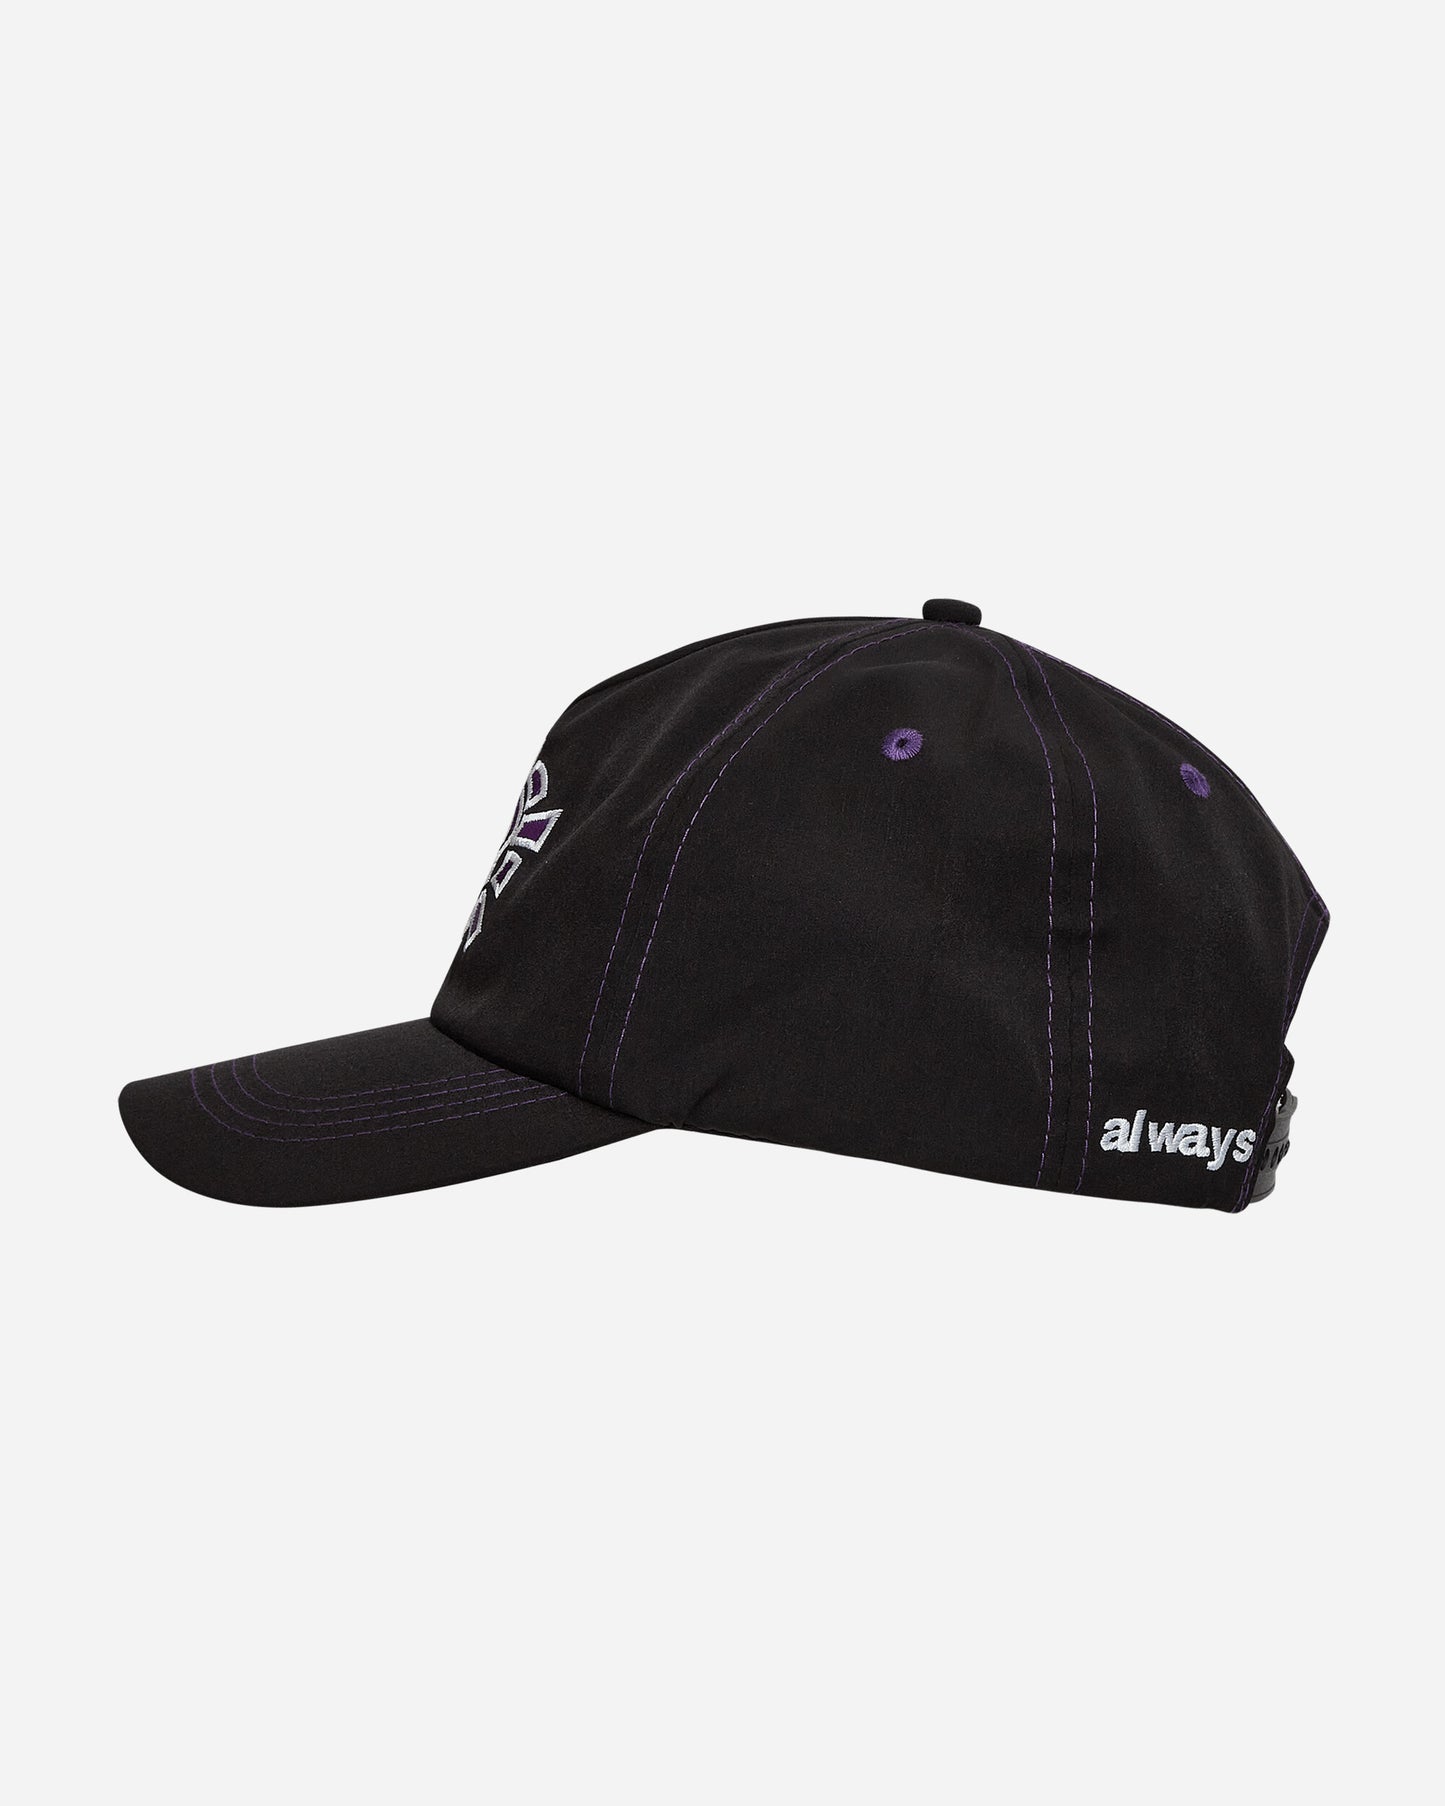 Always Do What You Should Do Nylon 5-Panel Sun Cap Black Hats Caps SUNCAP BLACK